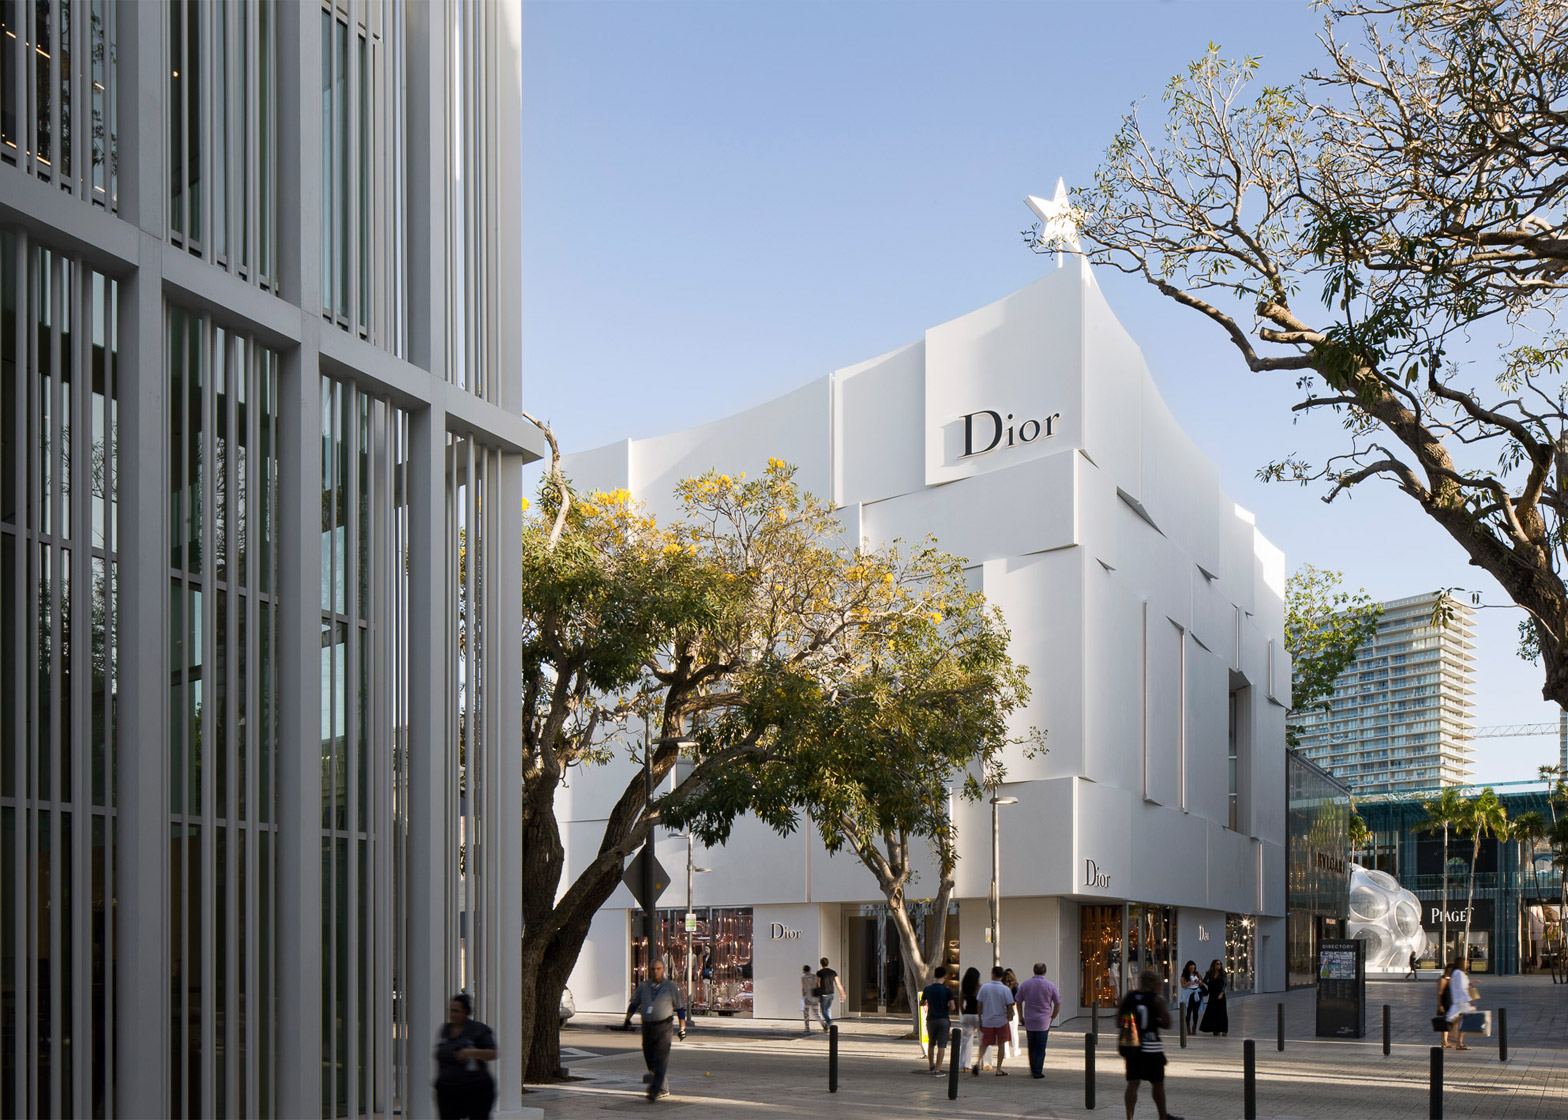 Dior joins designer heavyweights in Miami's Design District